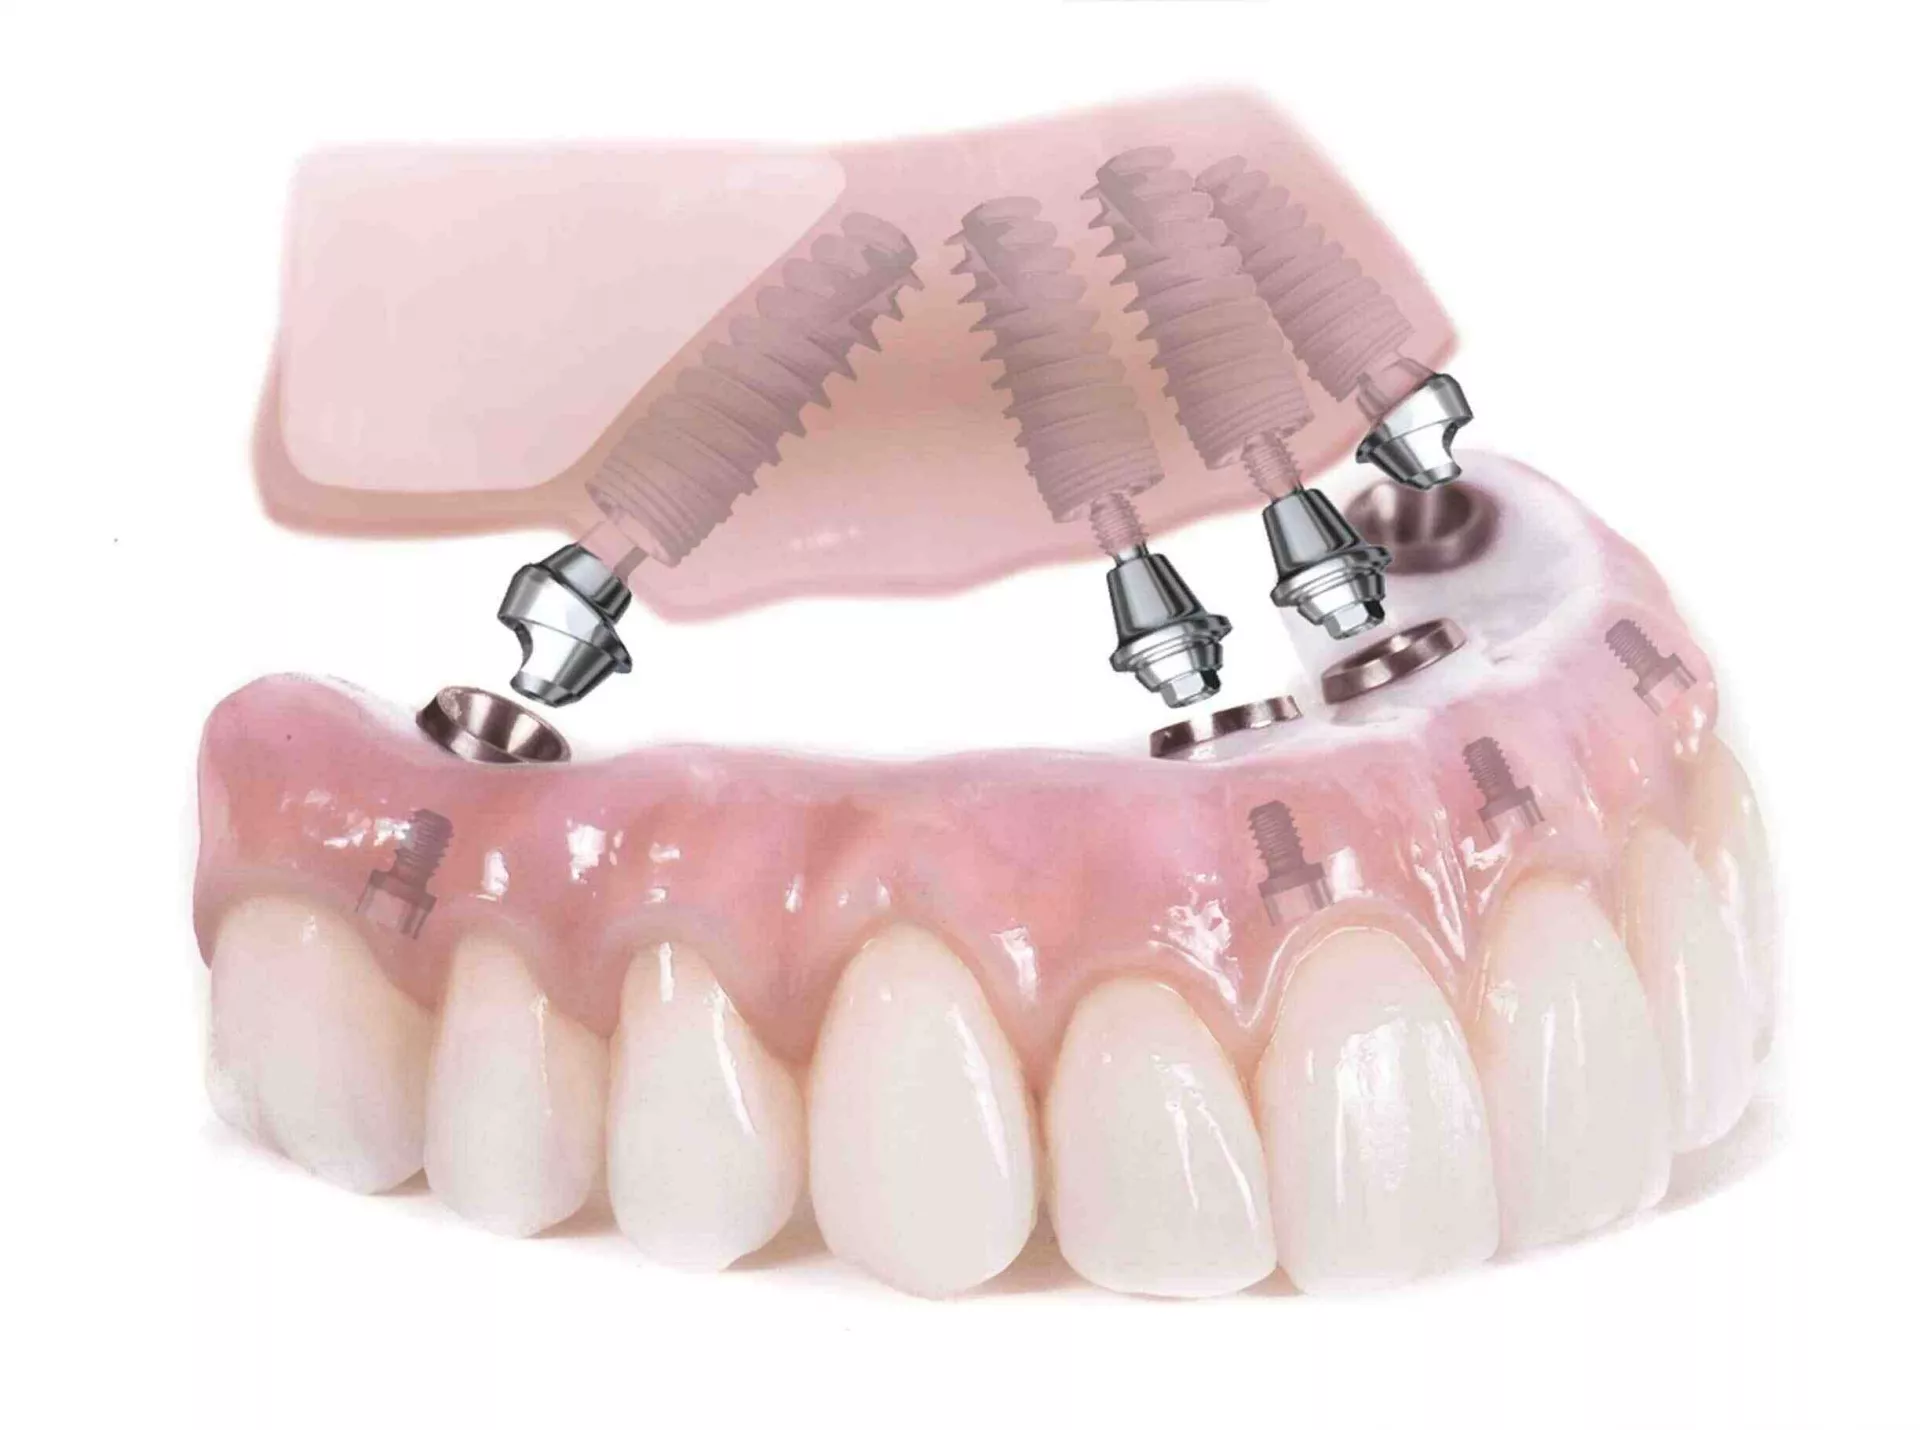 Teeth image 1